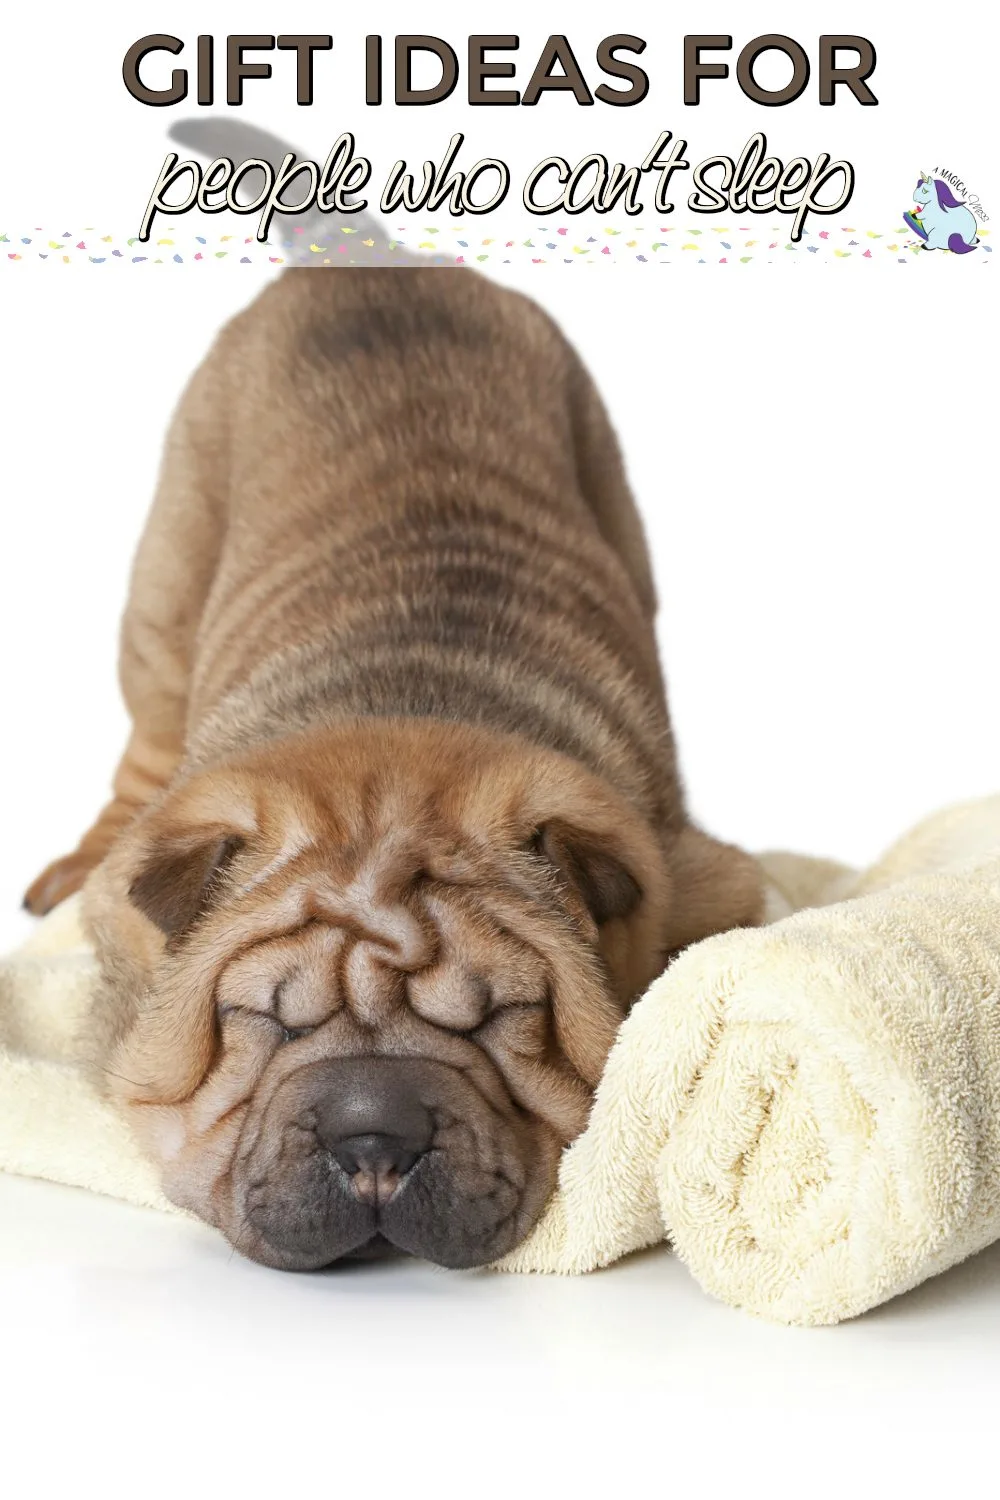 Wrinkly dog who looks sleepy on a blanket. 